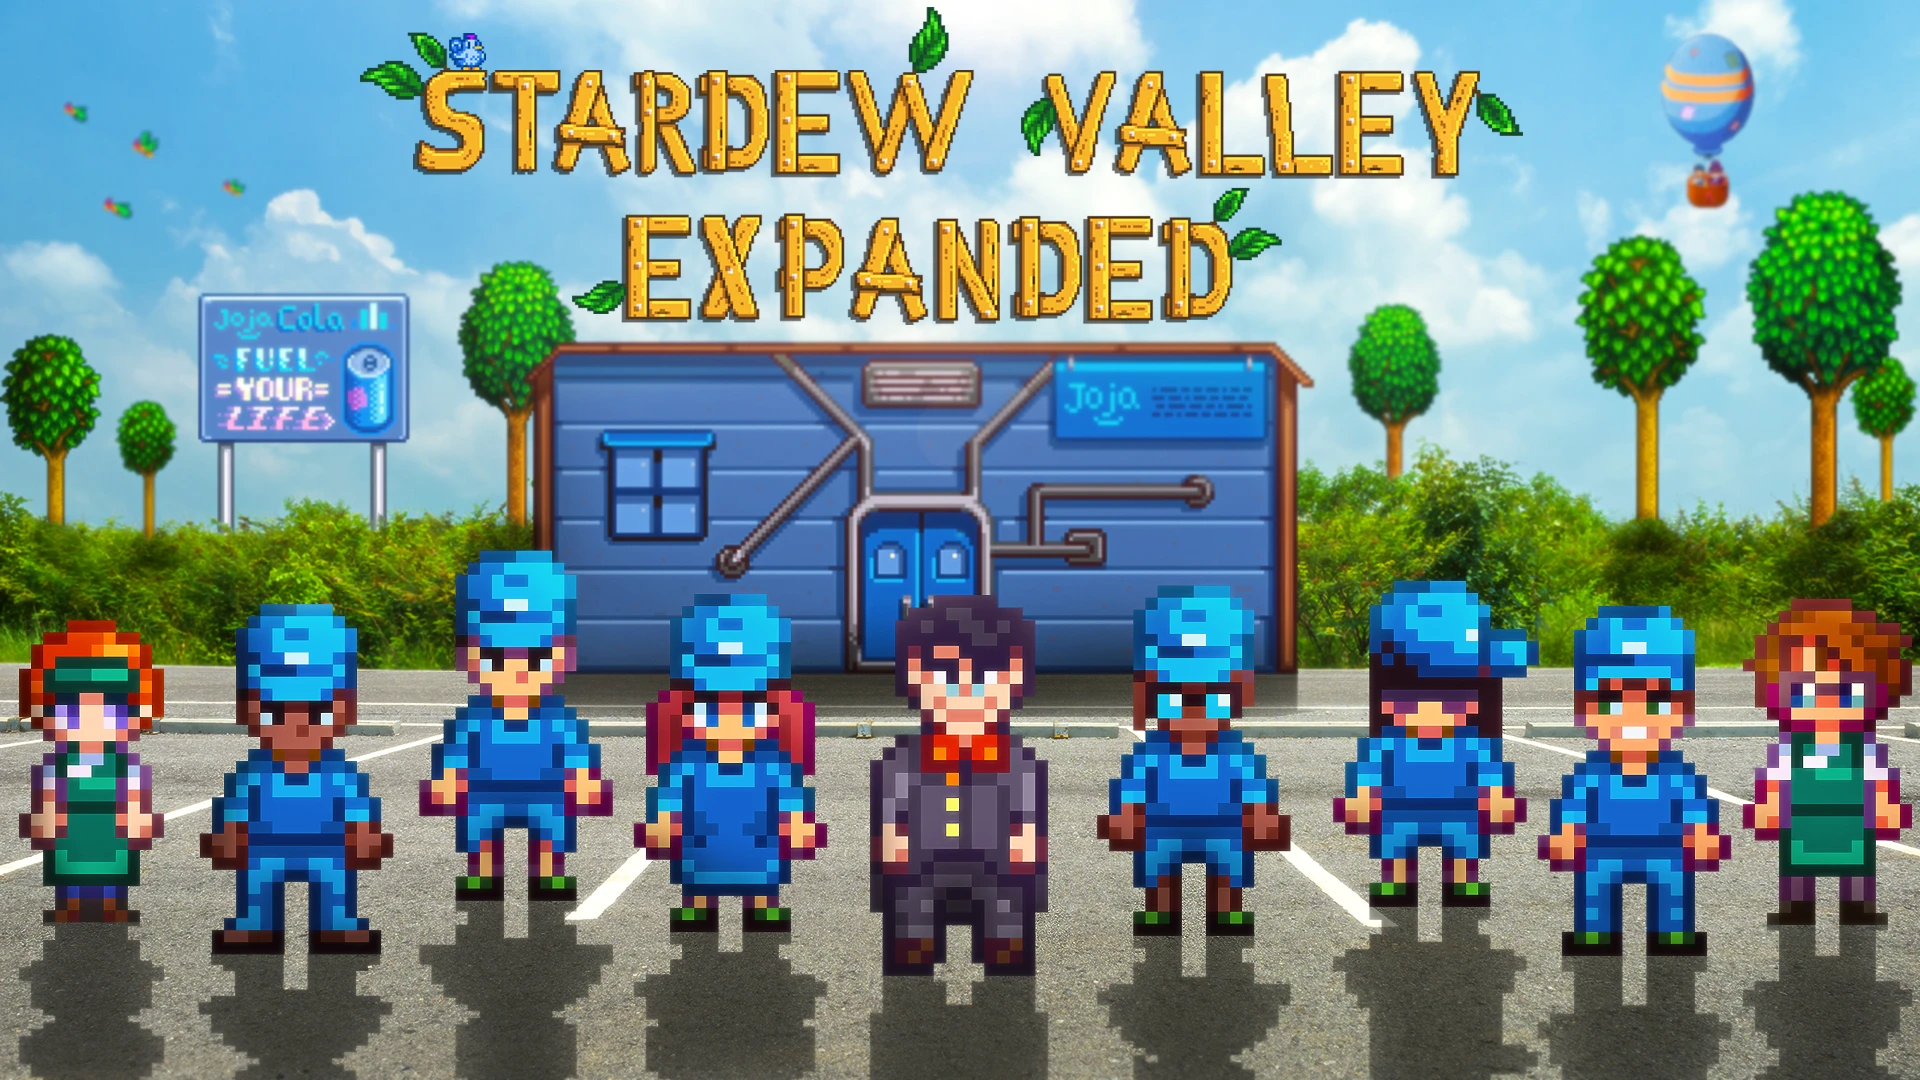 Stardew Valley Expanded Joja Update At Stardew Valley Nexus Mods And Community